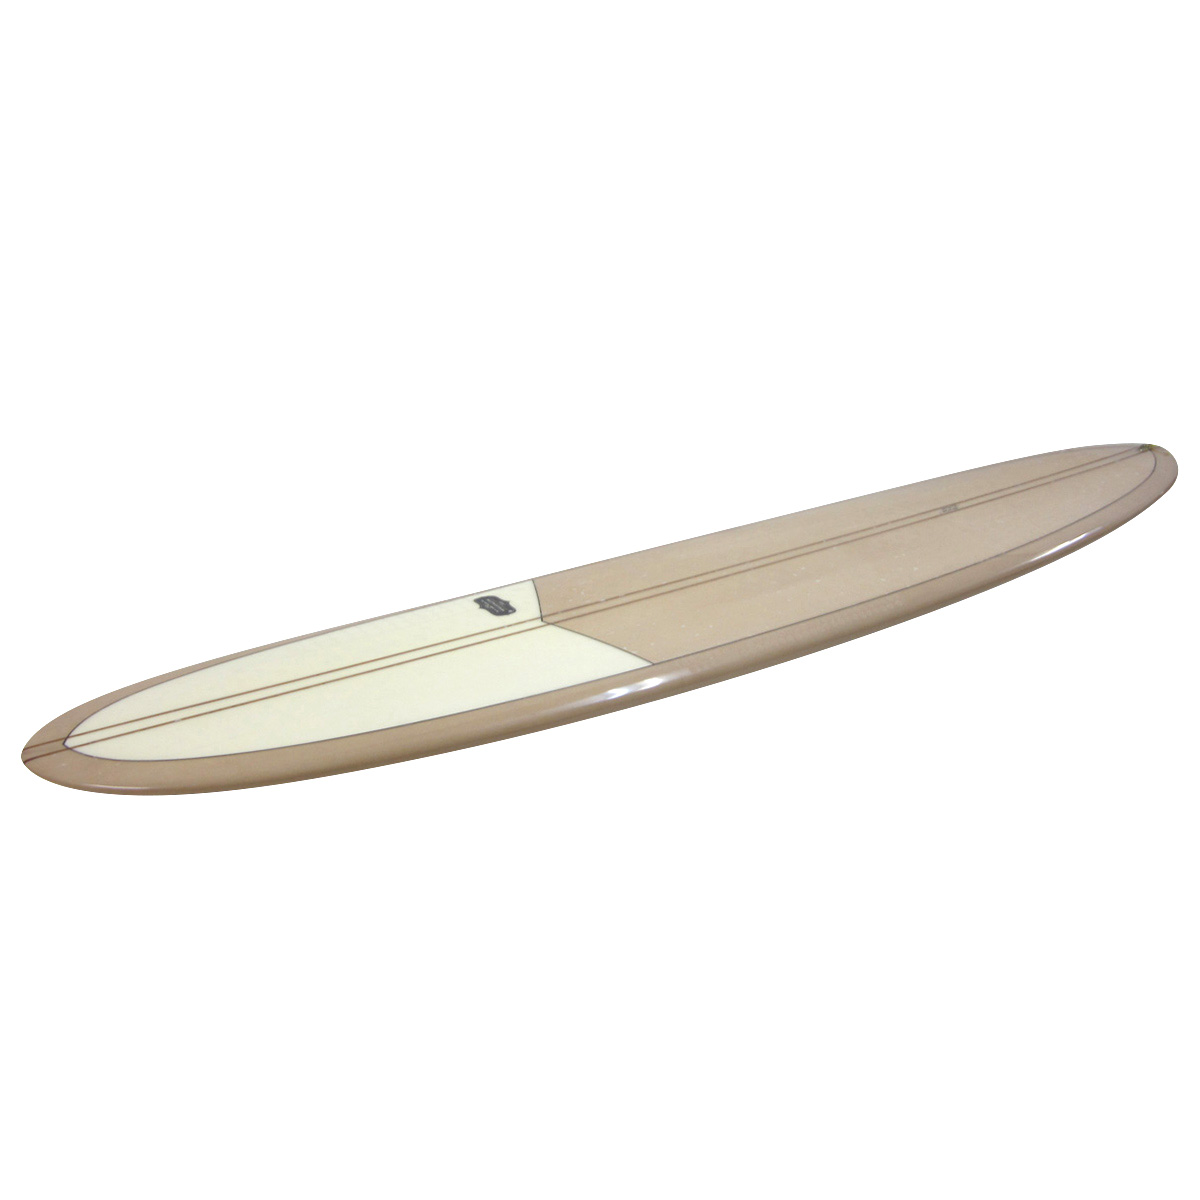 ALMOND SURFBOARDS / 9`2 PIN WHEEL